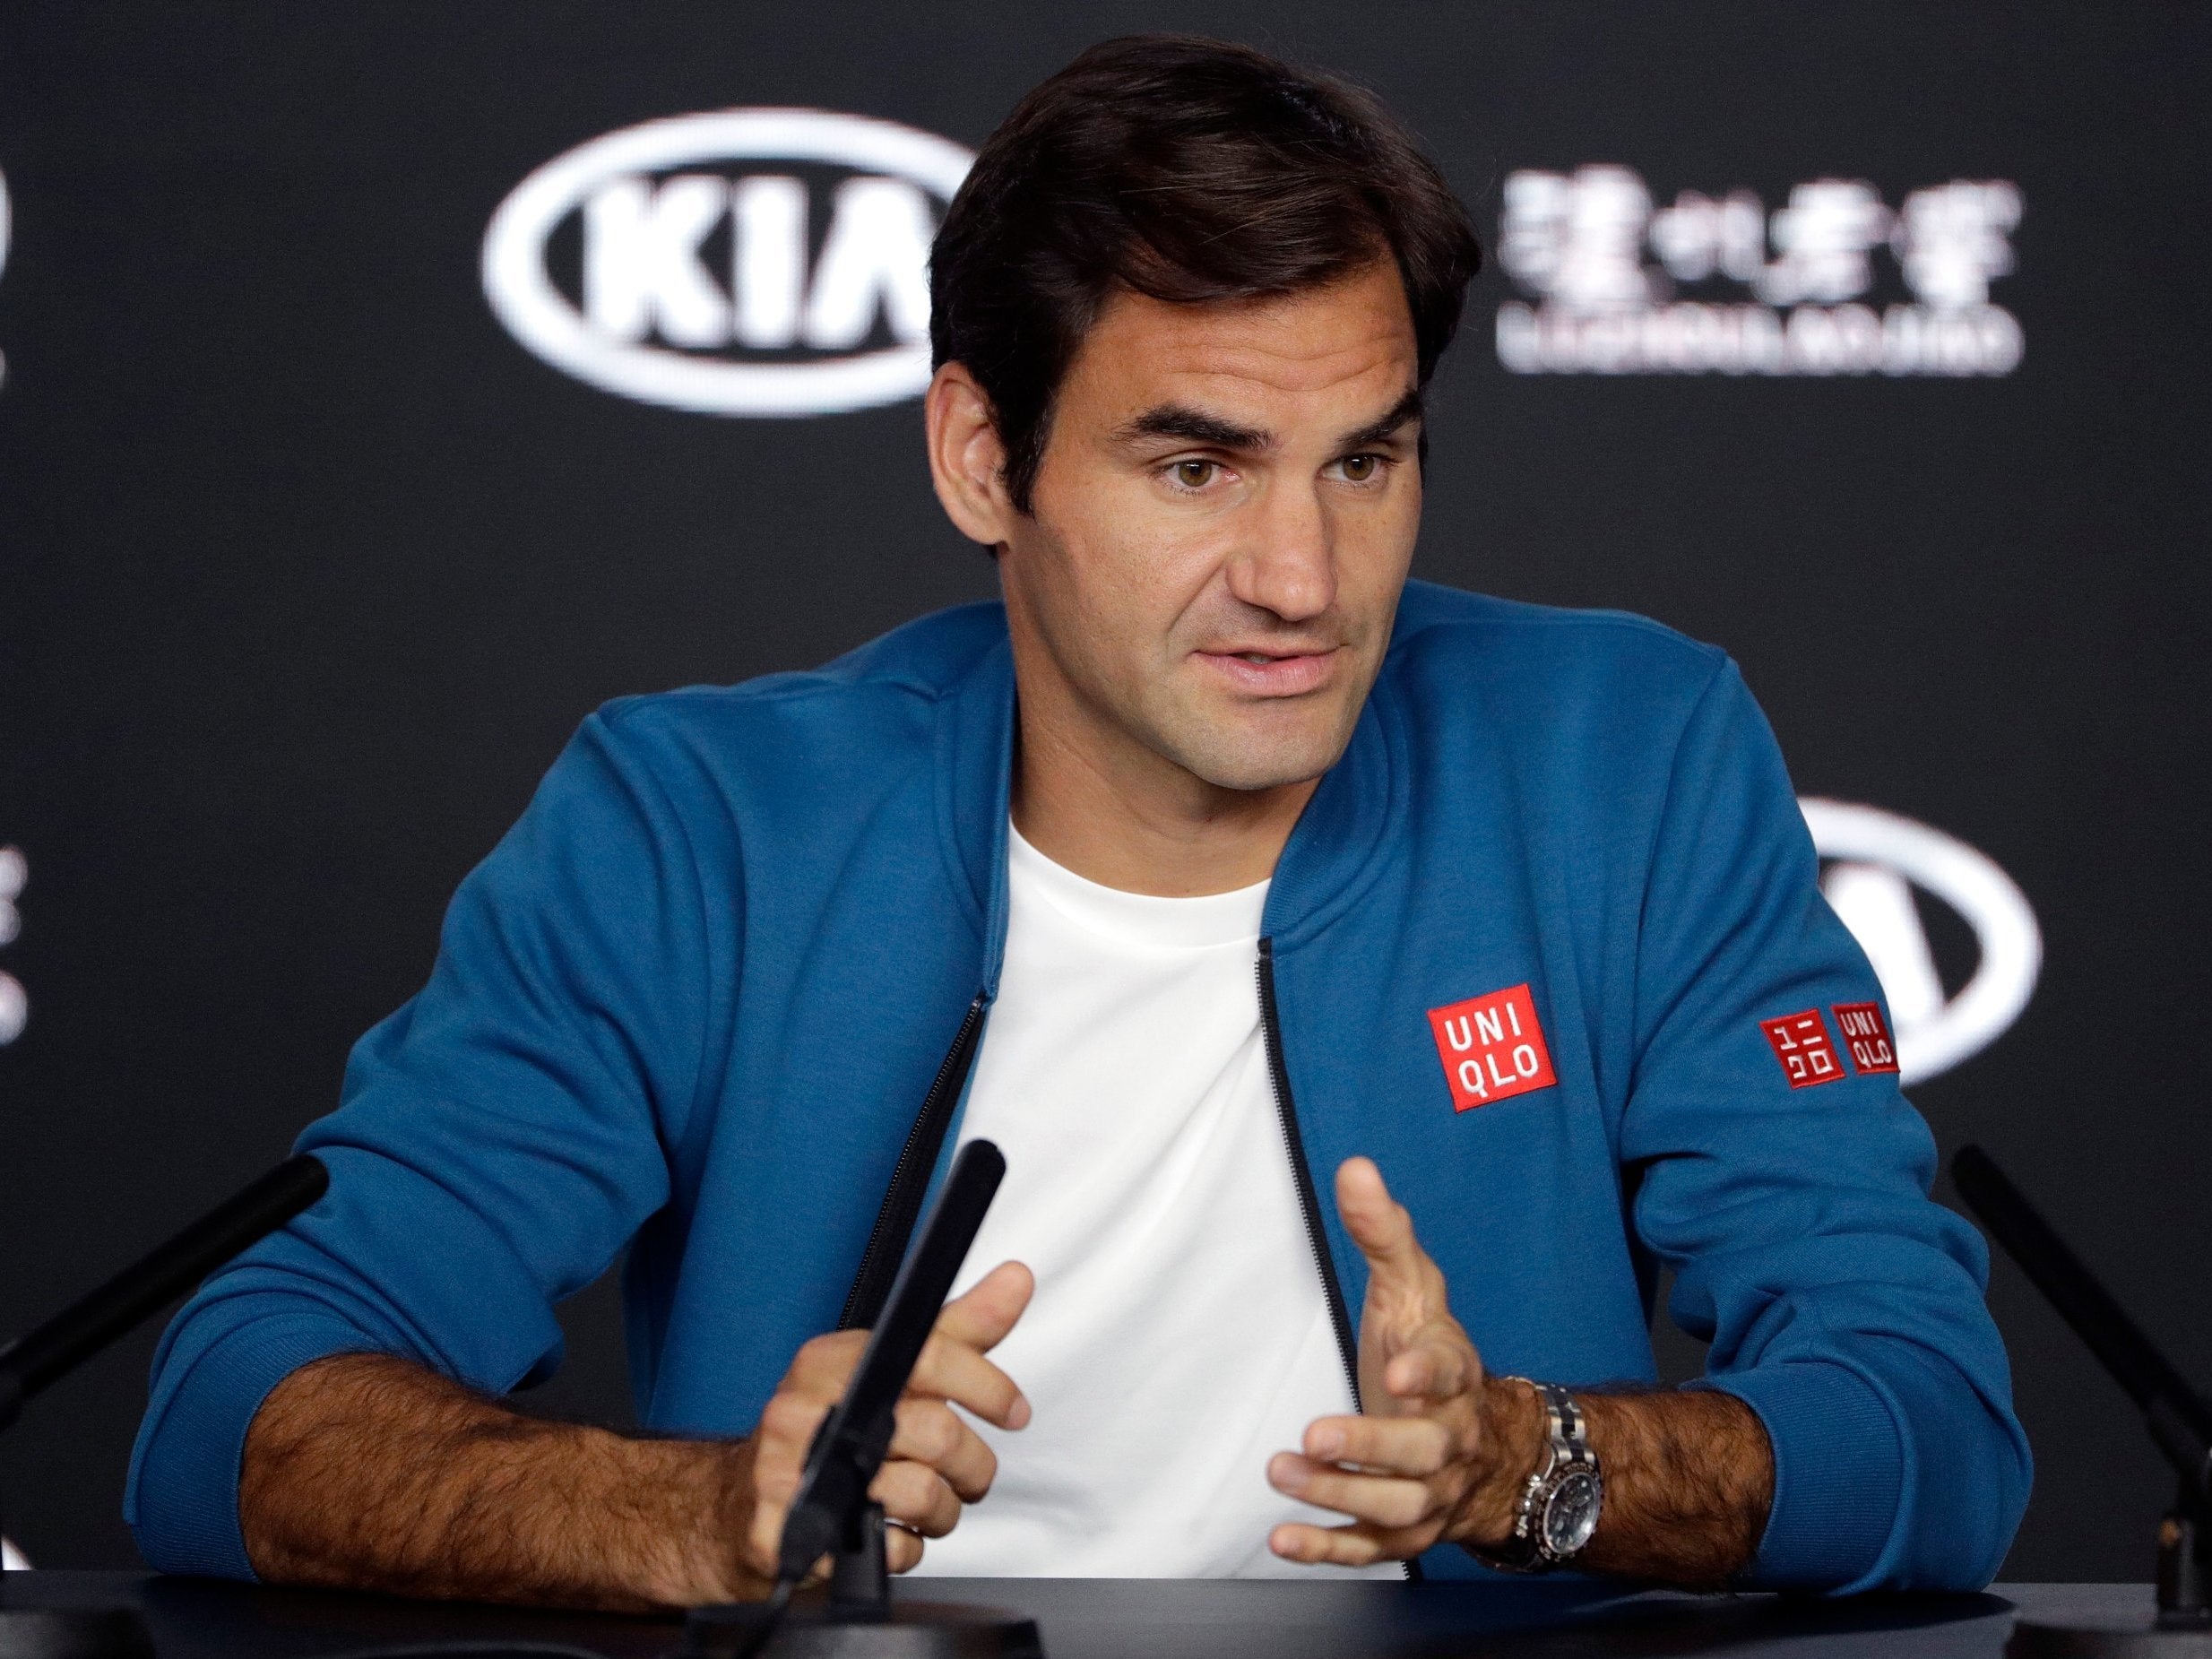 Federer is the defending champion in Melbourne